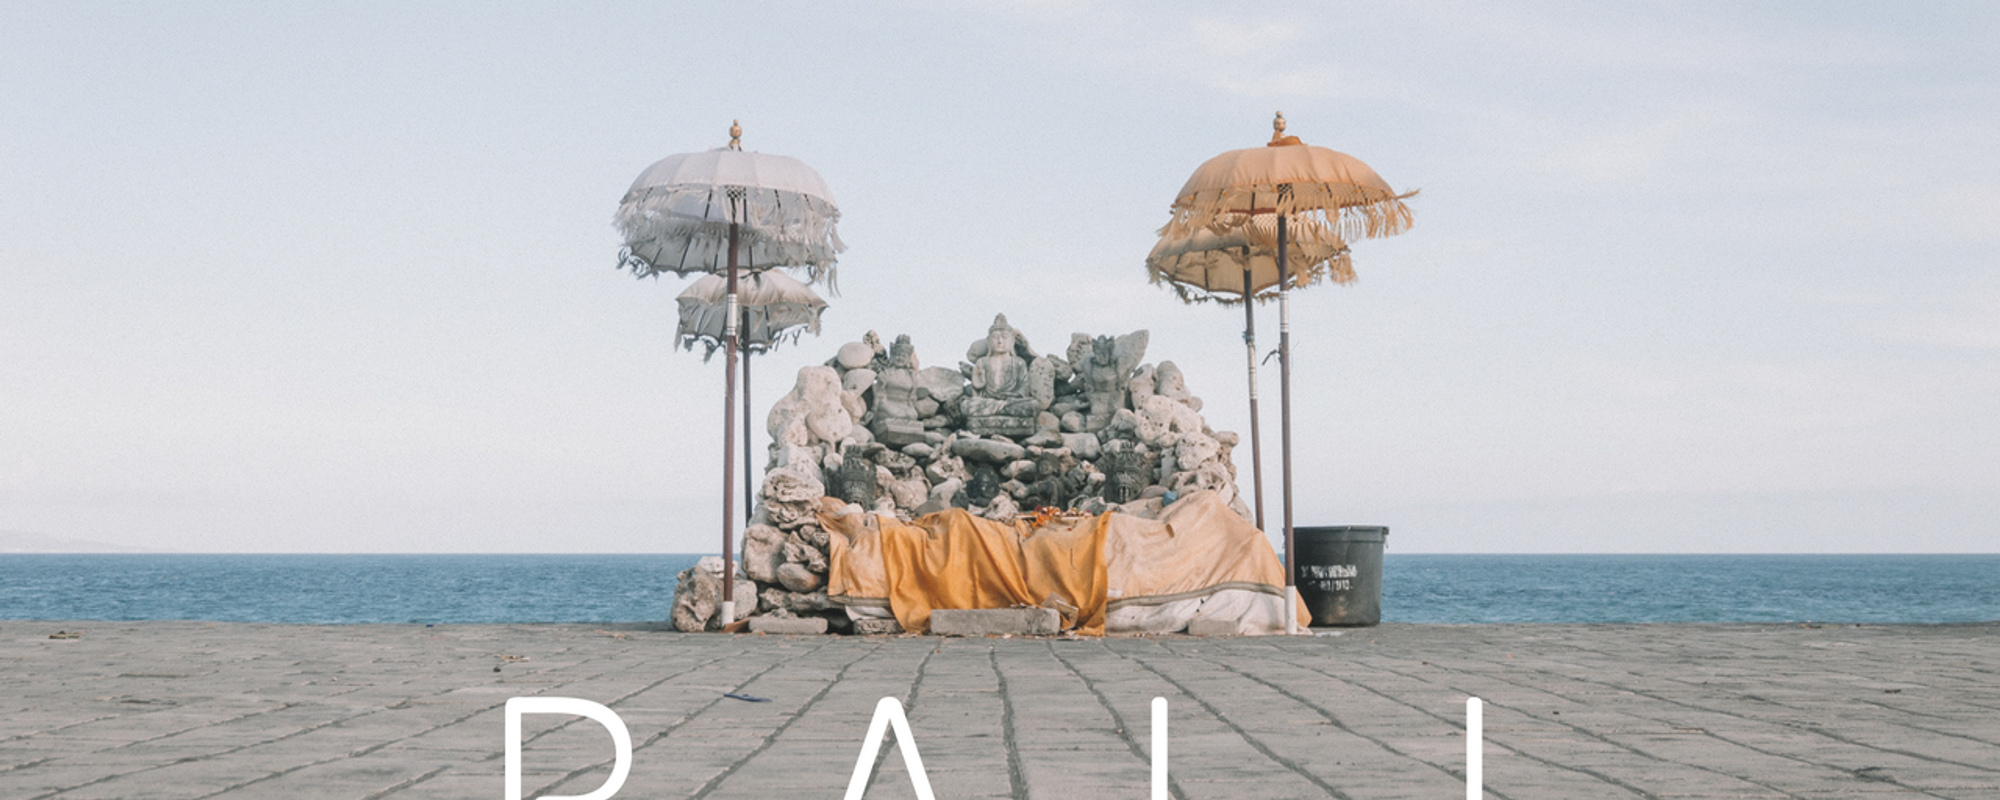 Visiting Bali : tourists' land or good travel spot ?